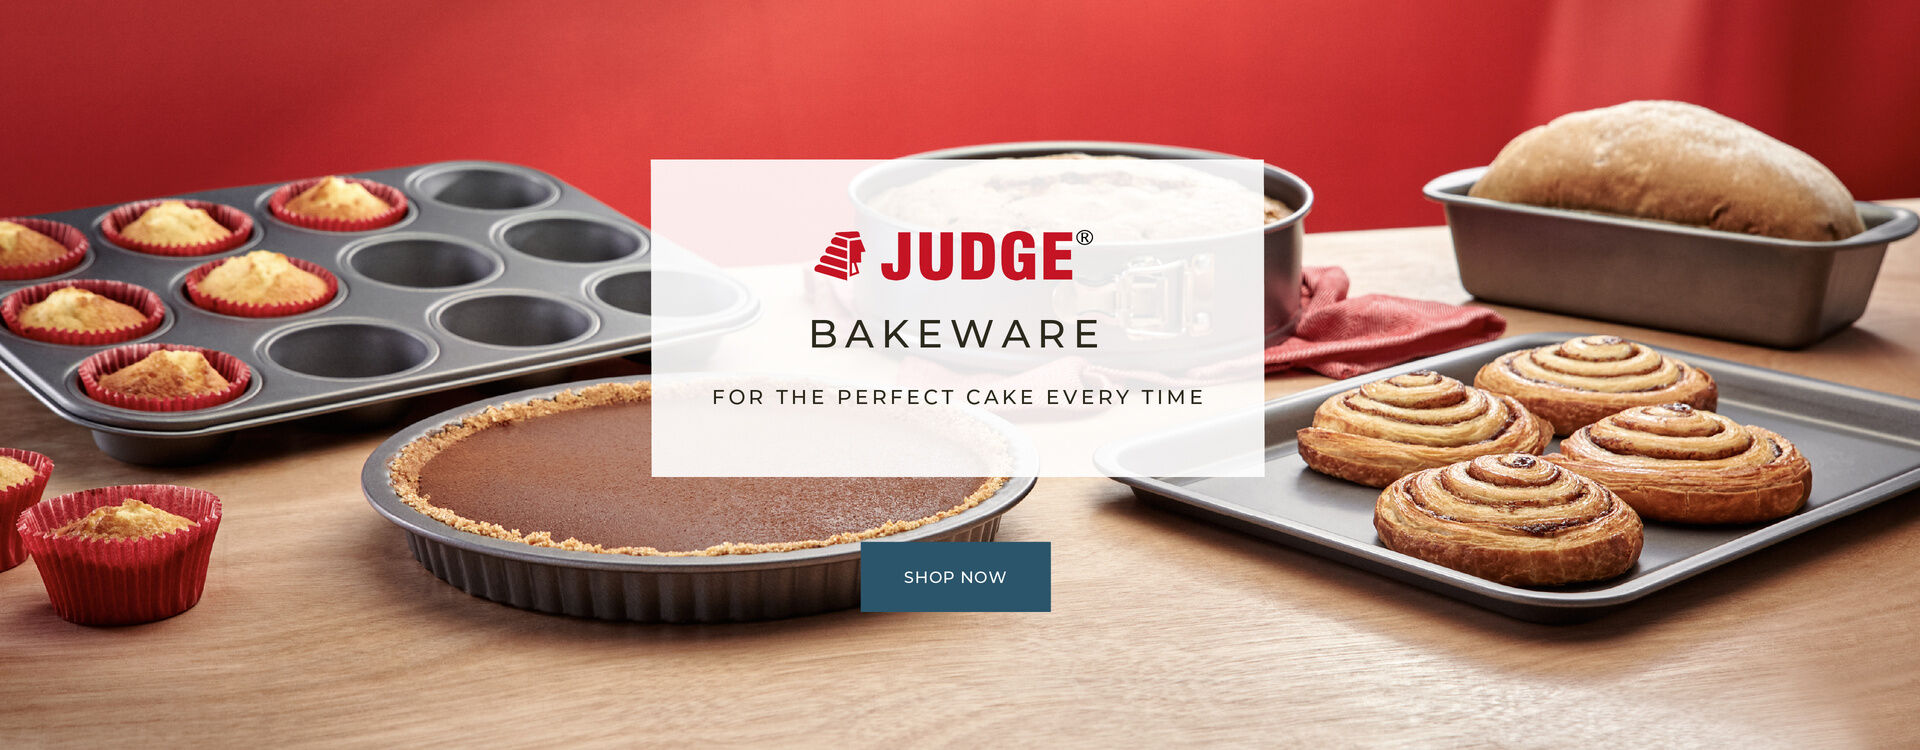 Judge Bakeware